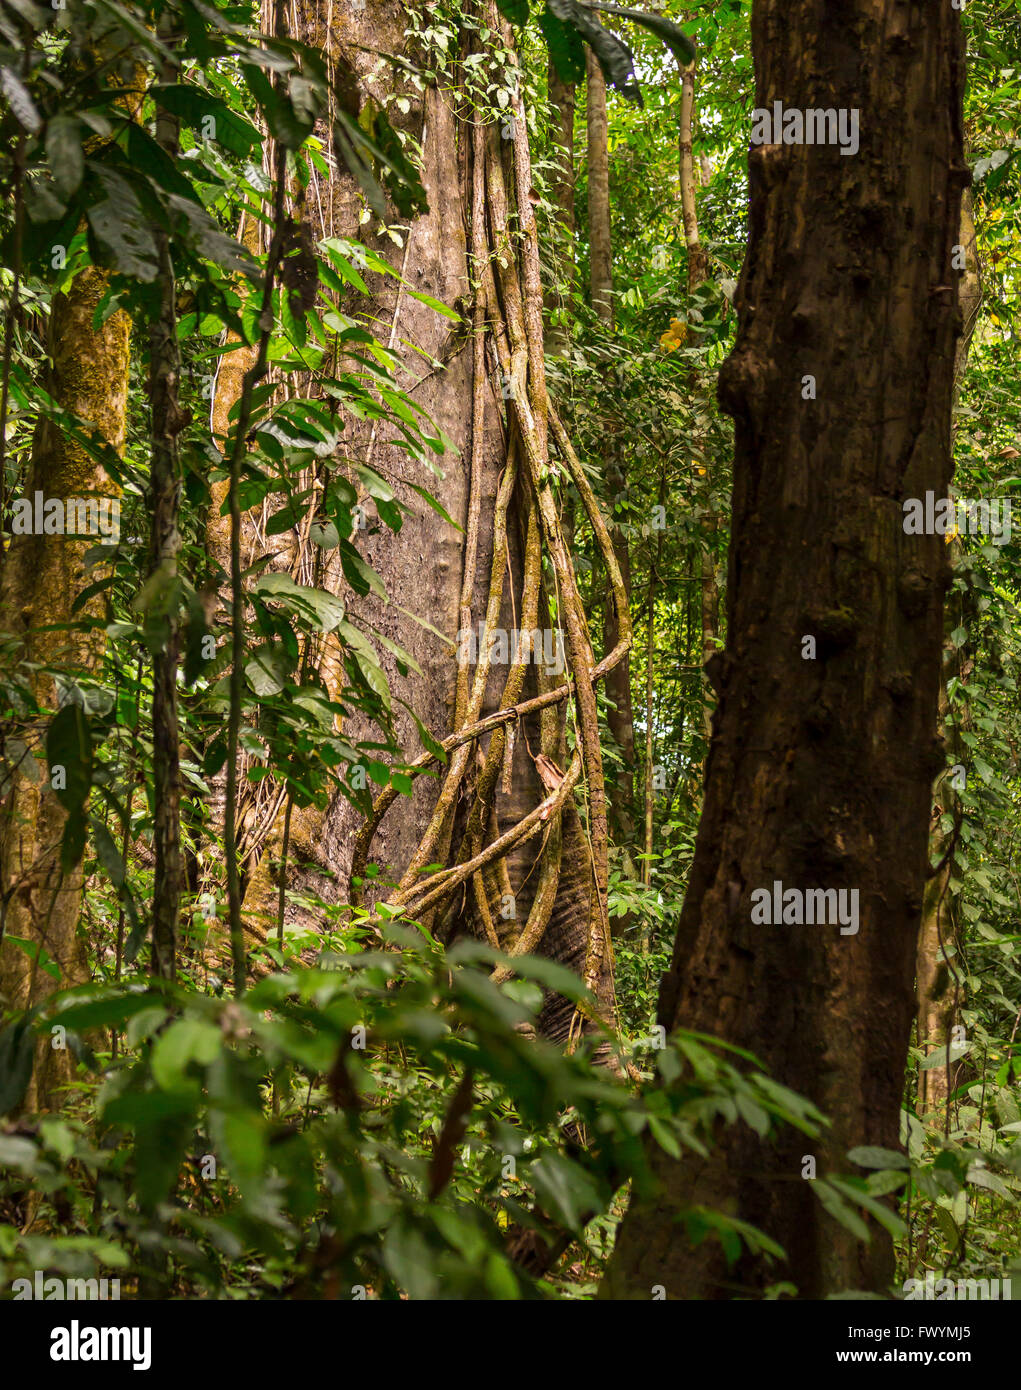 Península de Osa, Costa Rica - Epífita vides trepar un árbol en el bosque lluvioso. Foto de stock